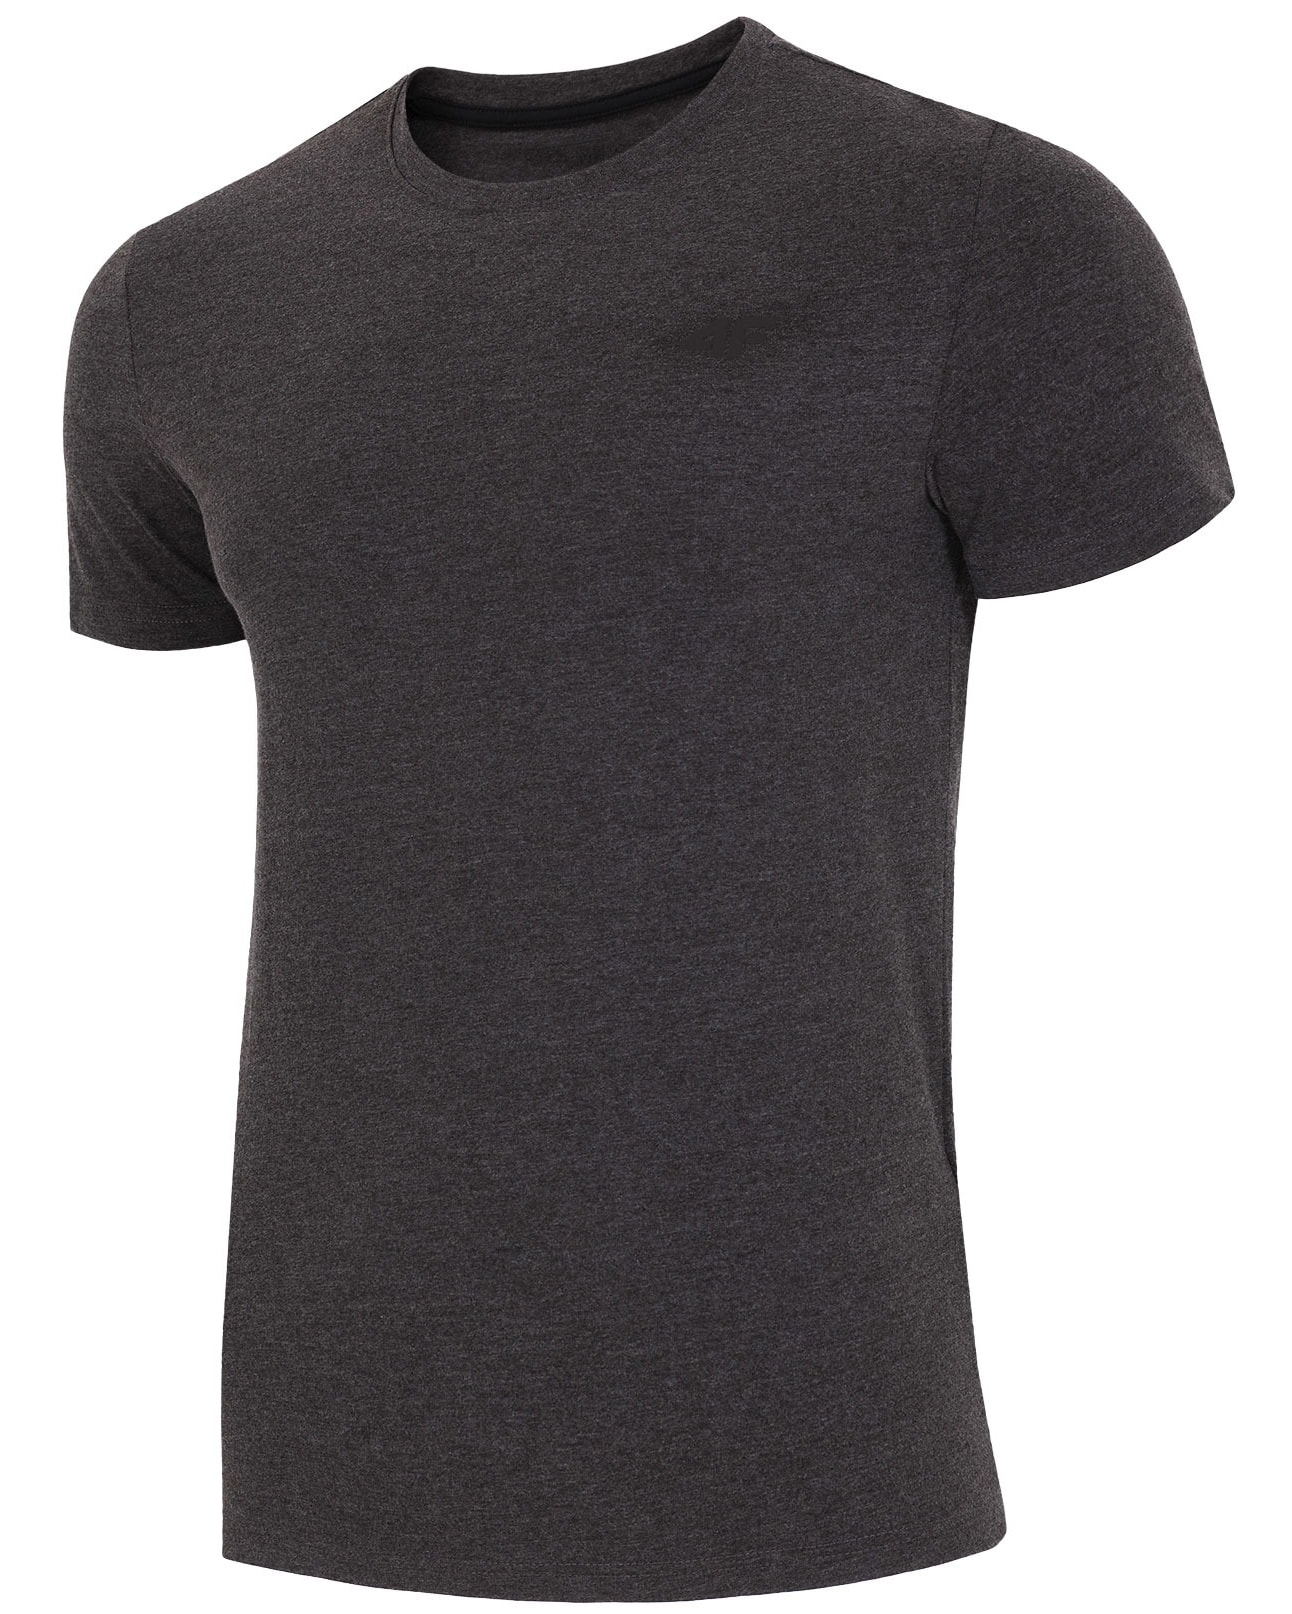 4F Man's T-Shirt - Dark Grey Melange